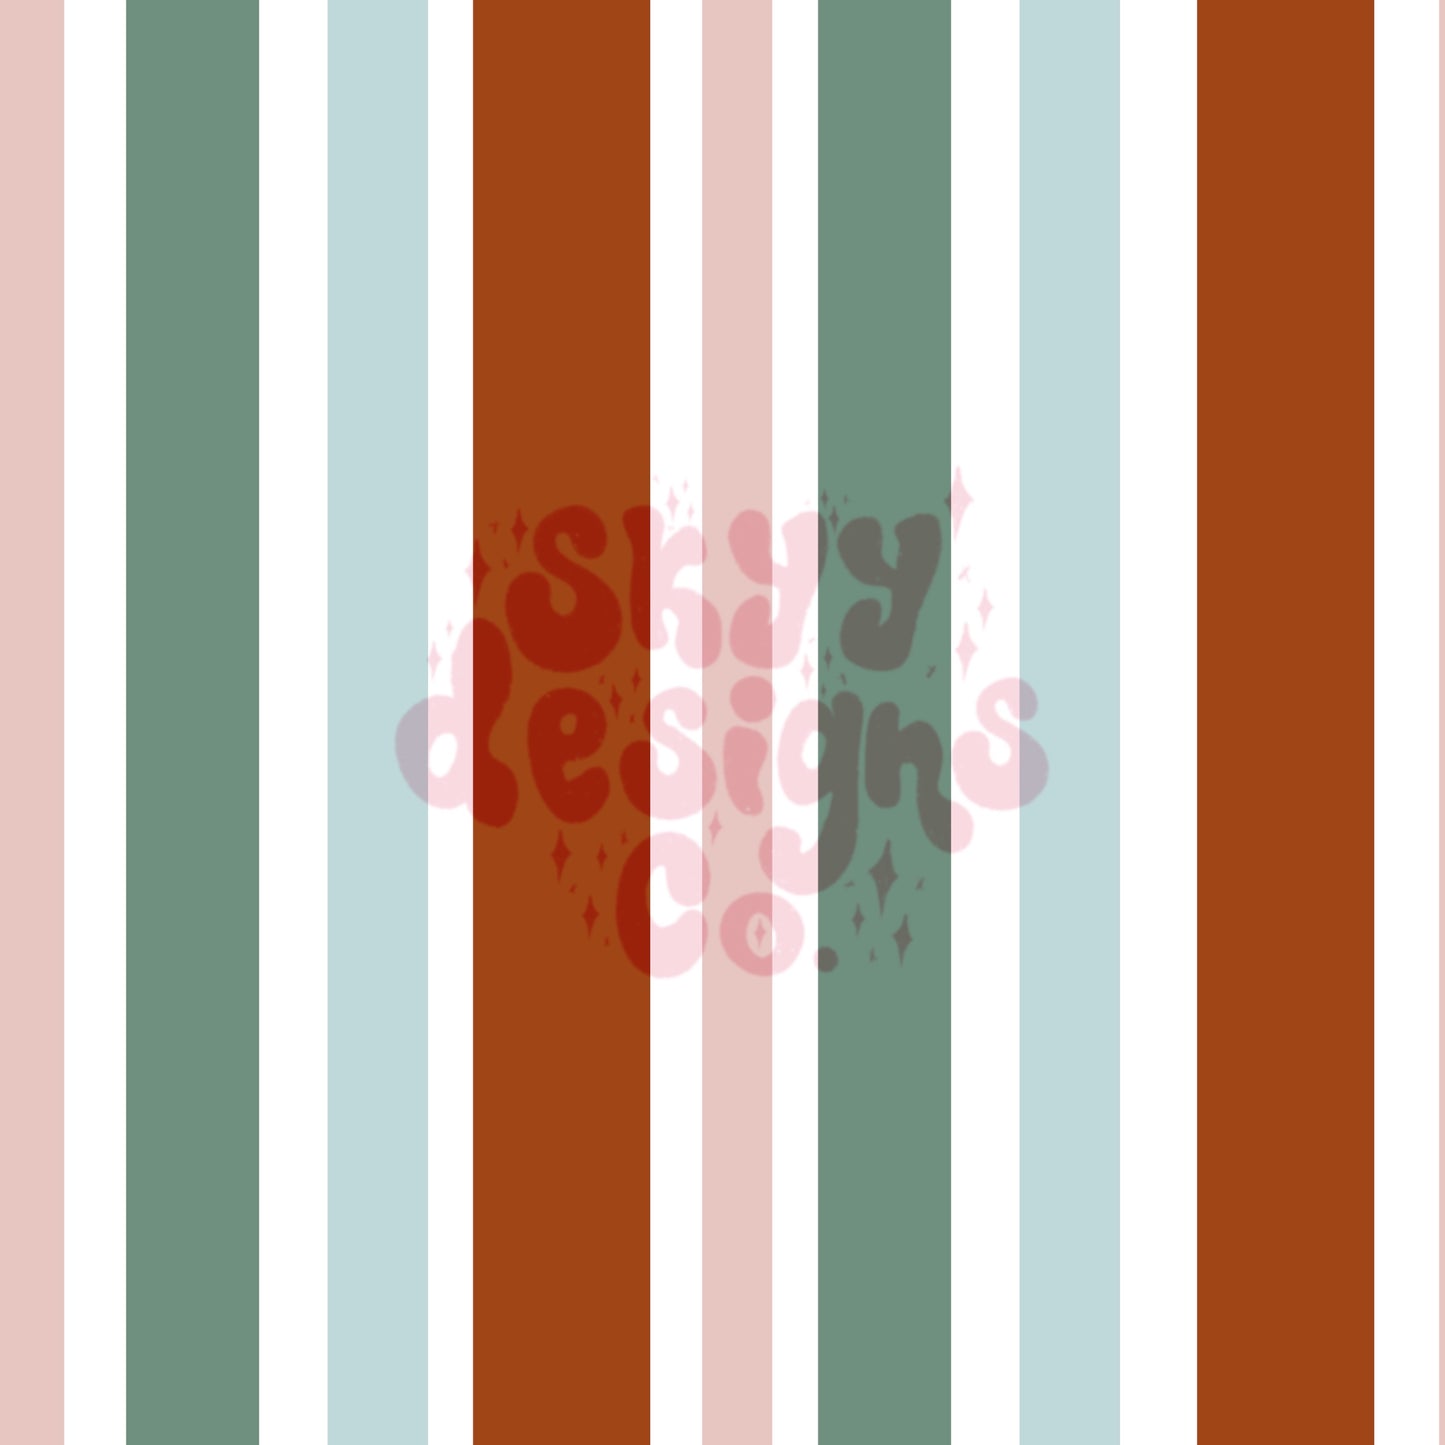 Christmas stripes seamless pattern